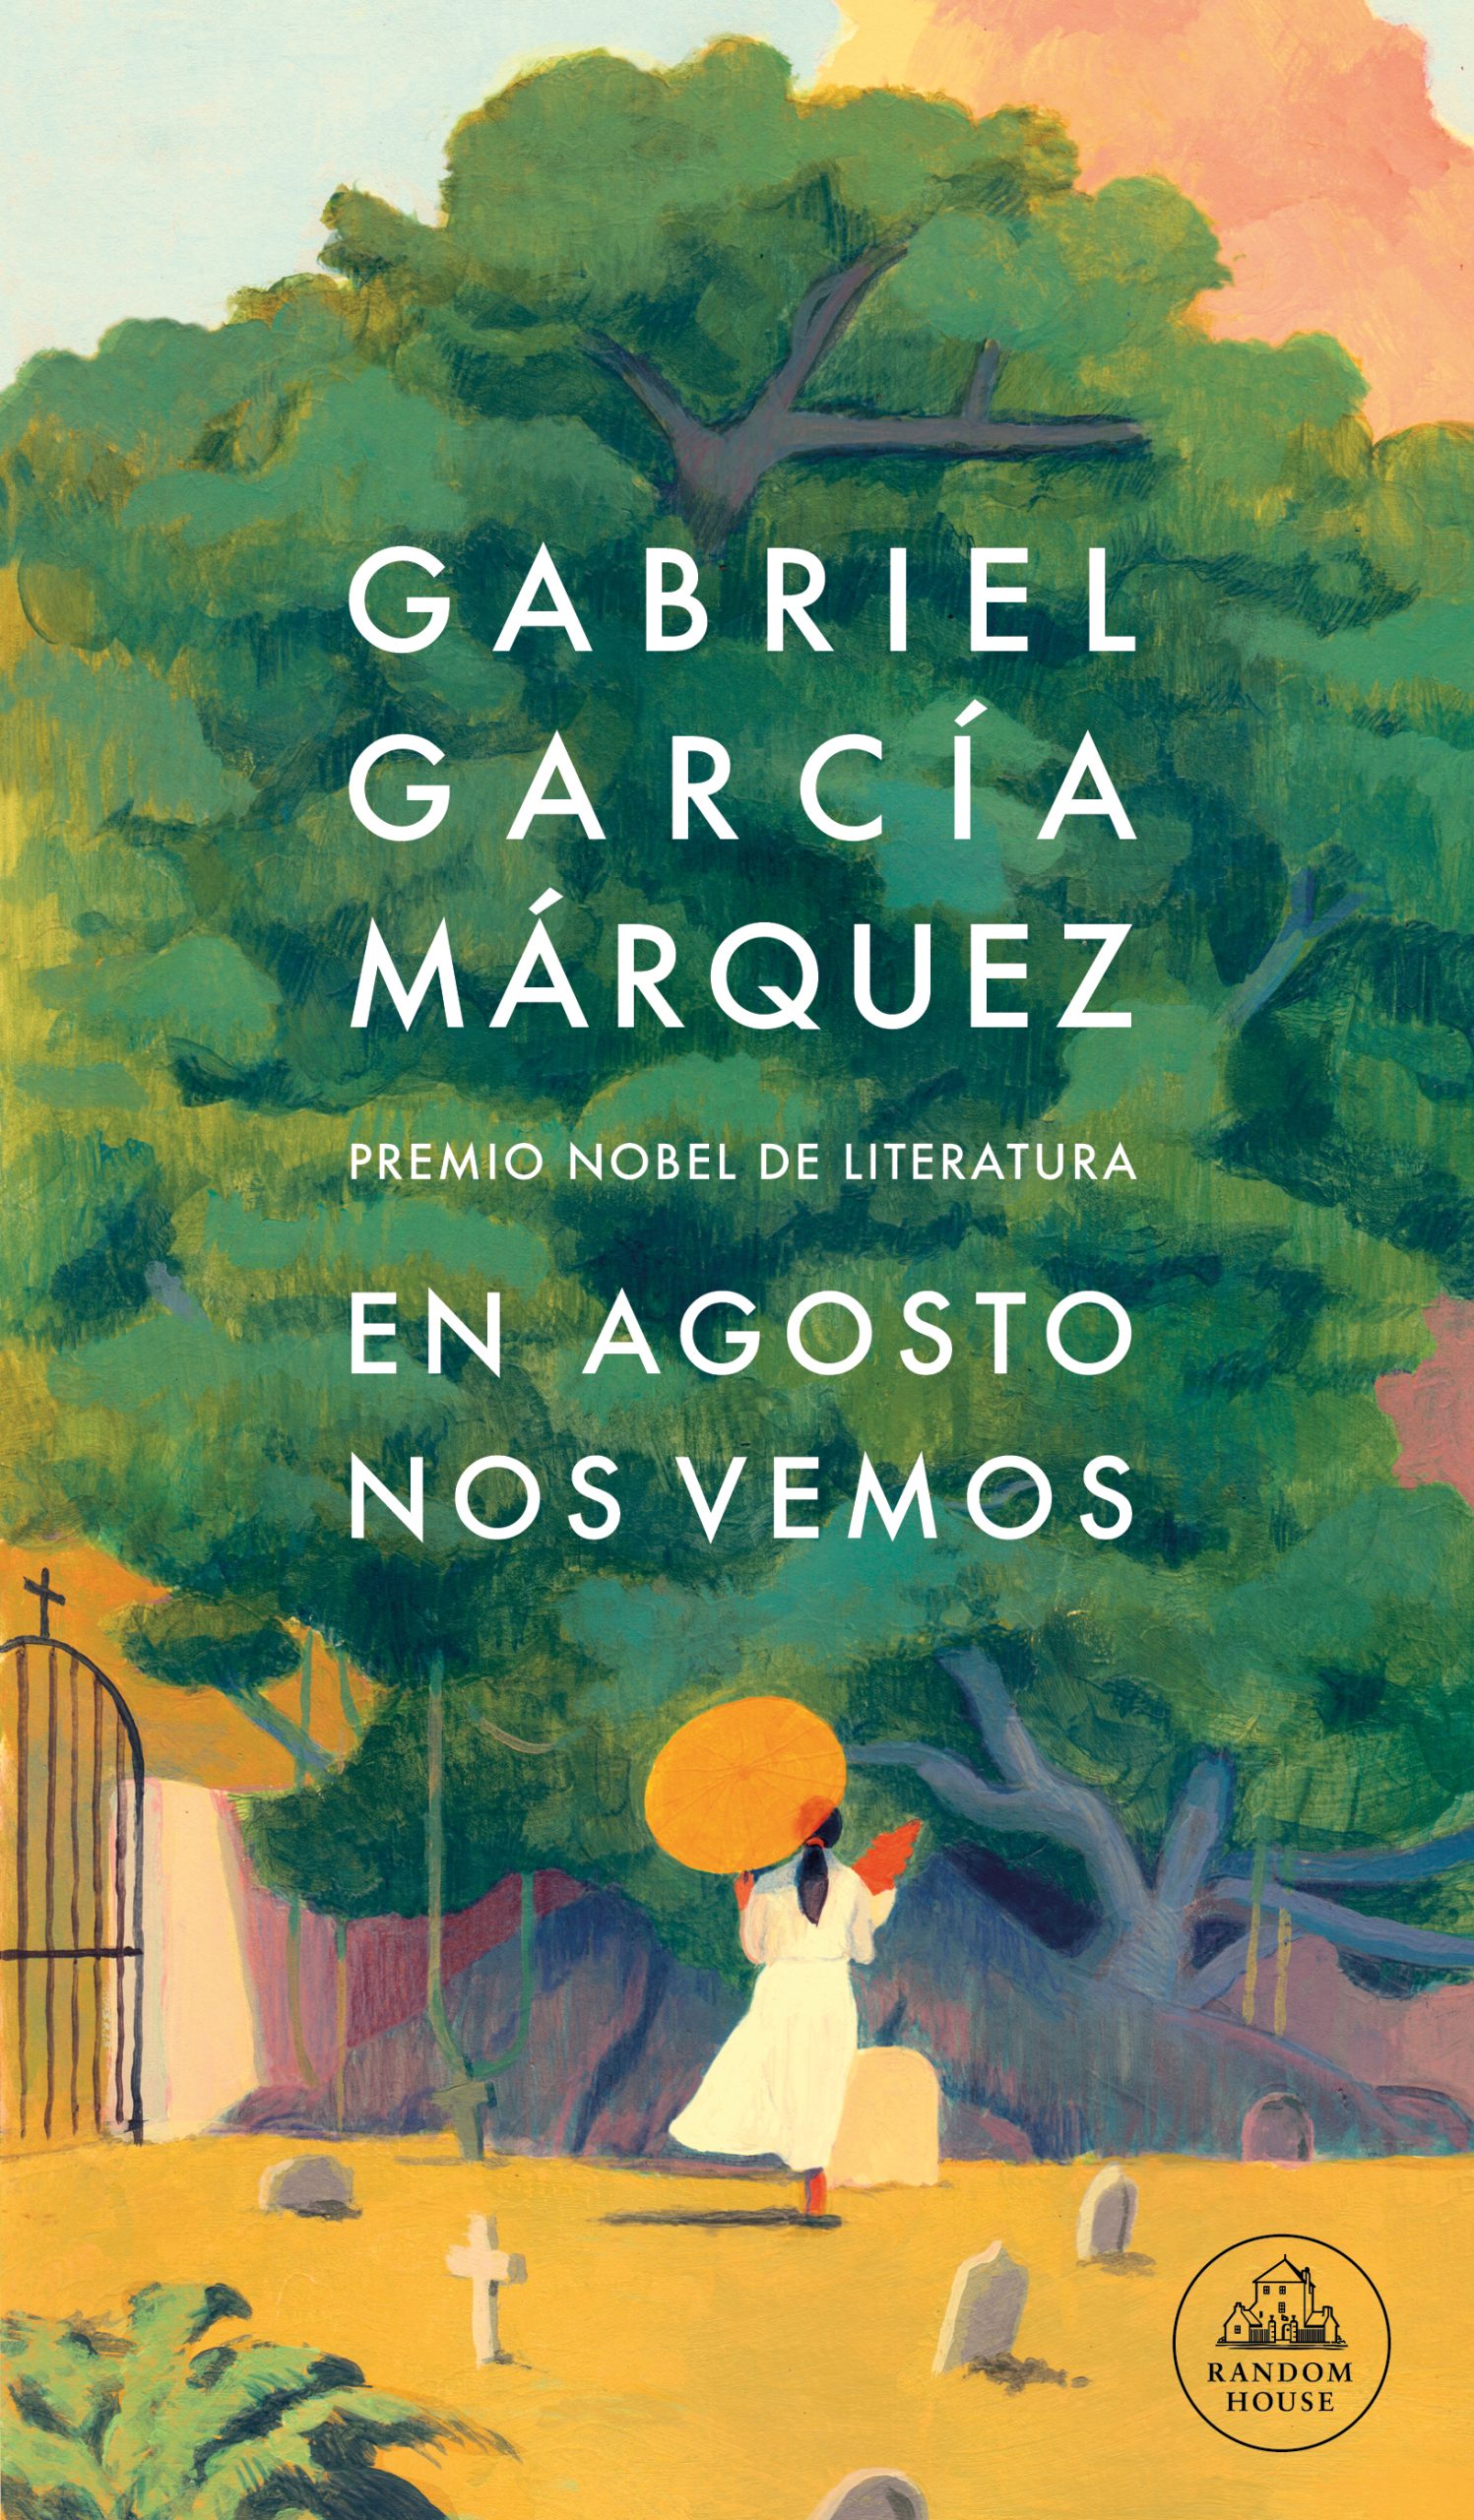 Reseña y fragmentos: “En agosto nos vemos”, la novela póstuma de Gabriel García Márquez